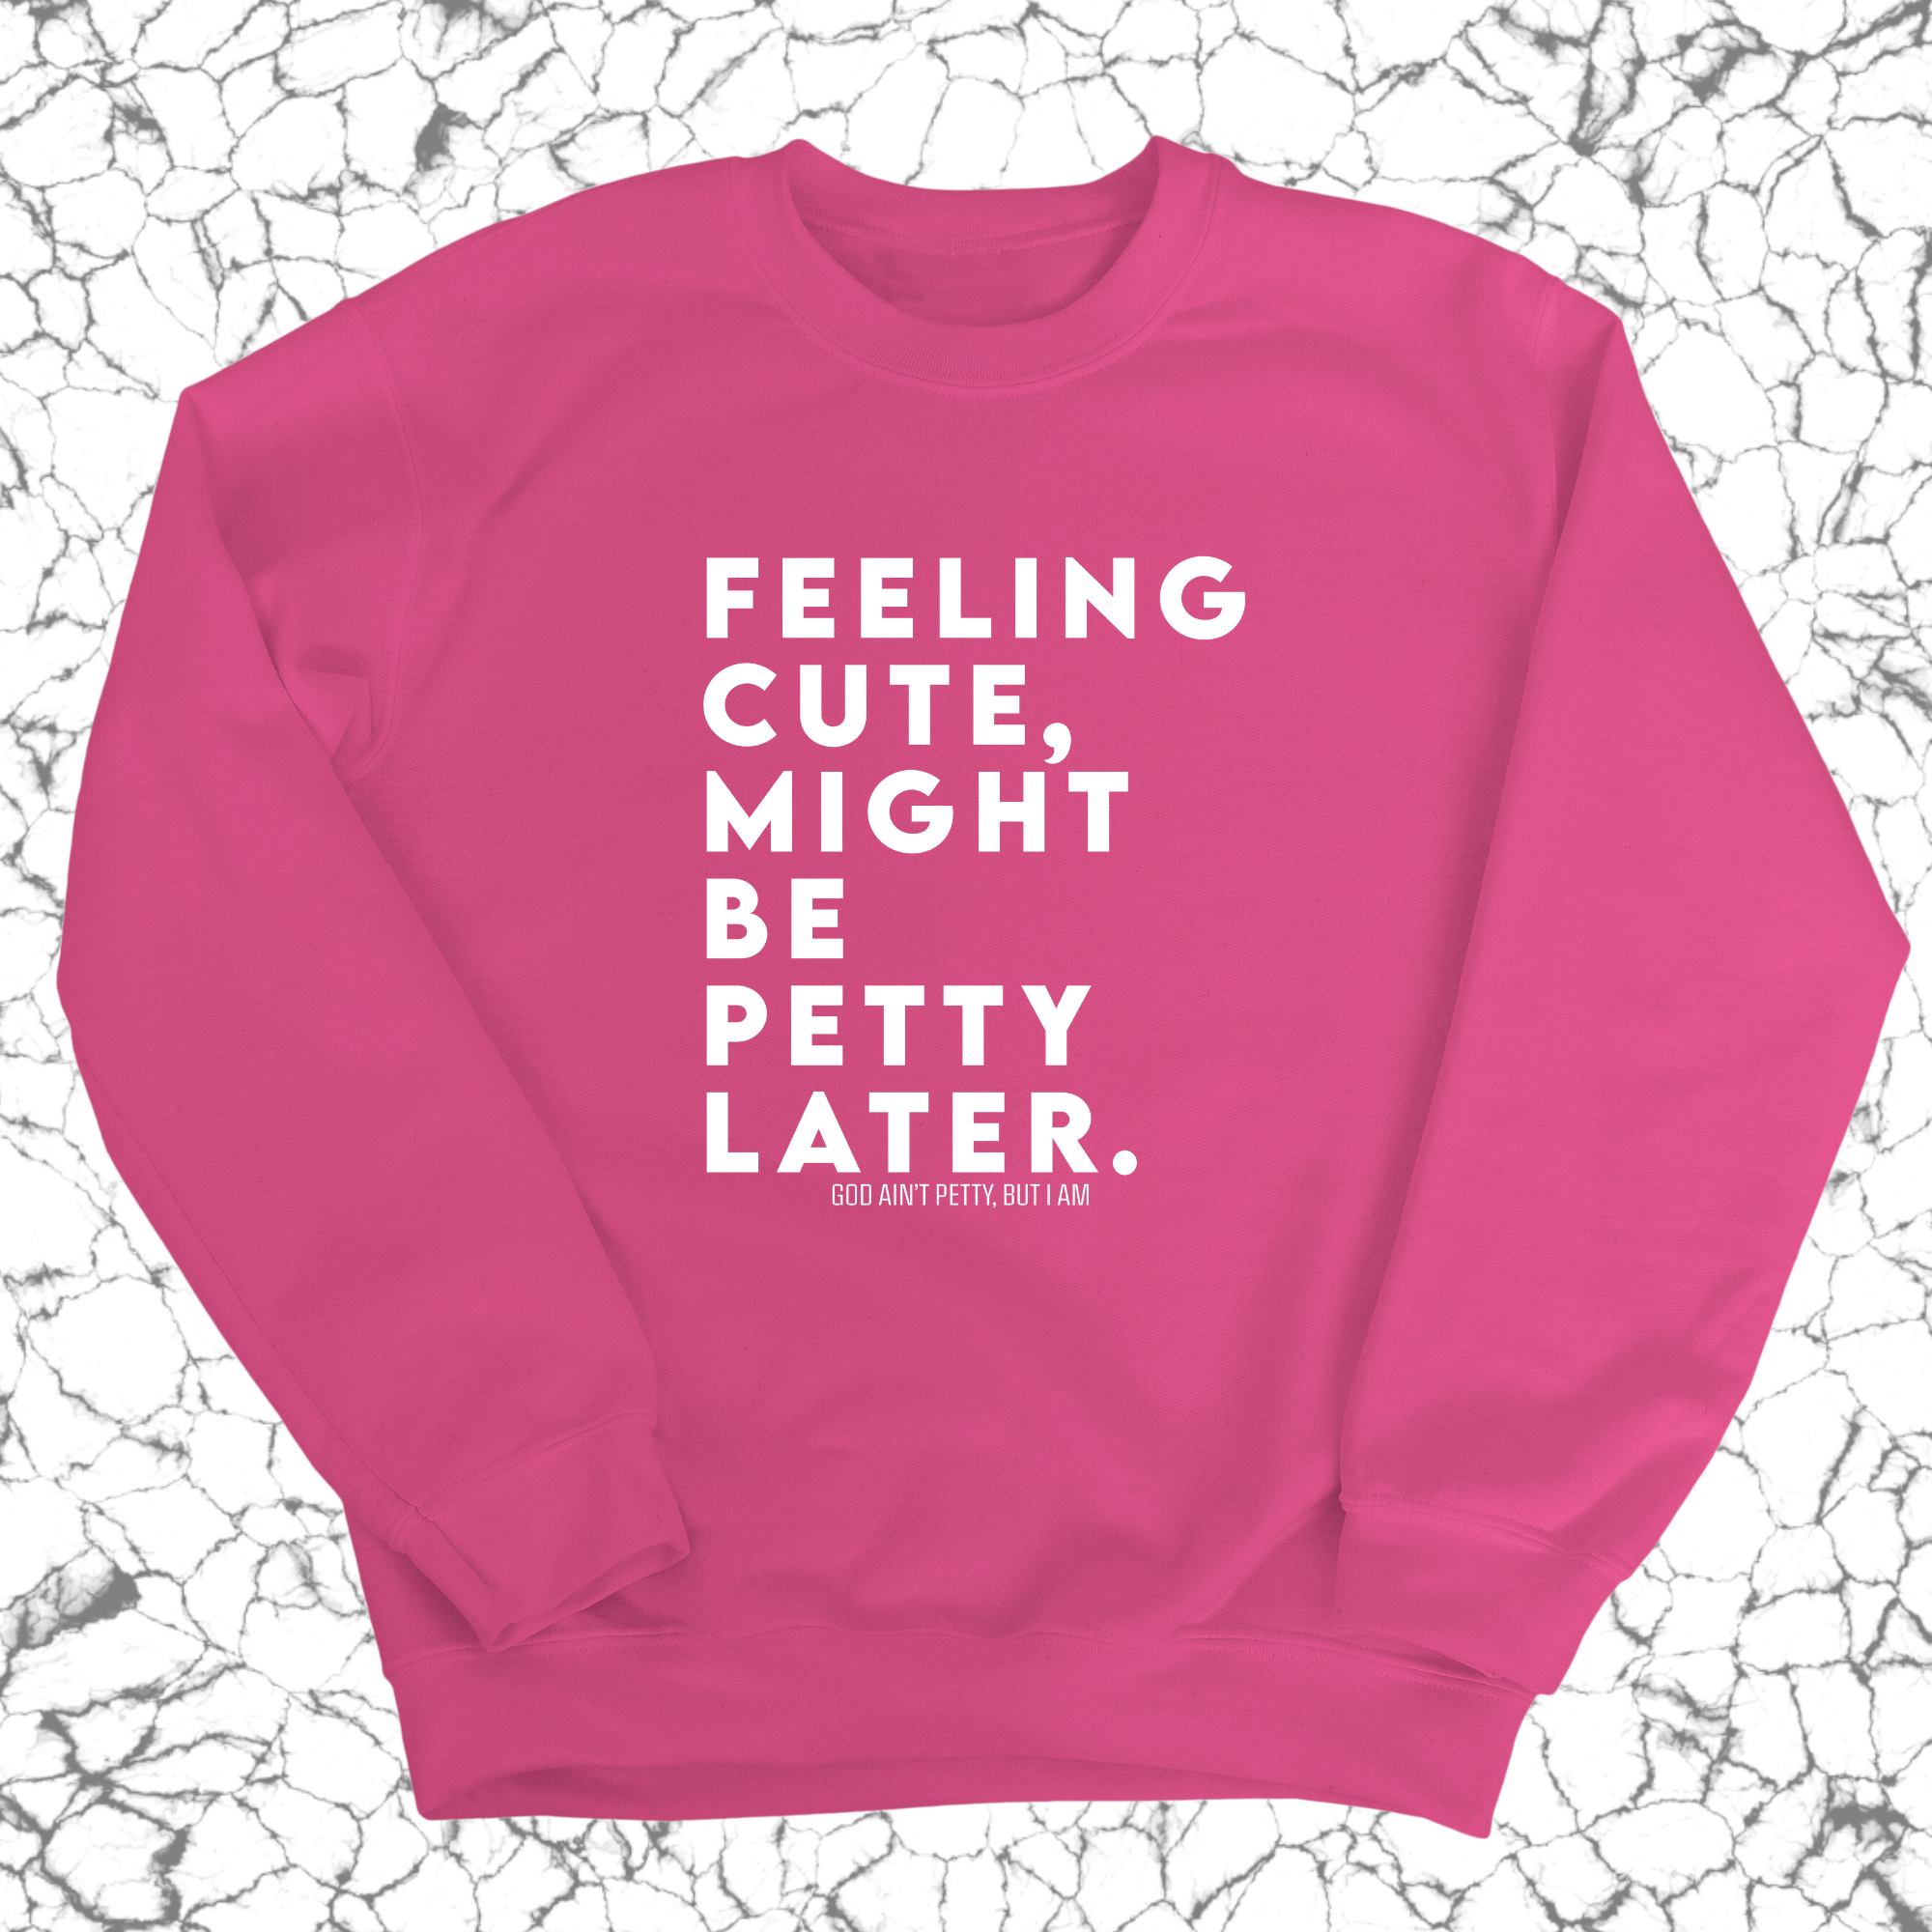 Feeling cute, might be petty later Unisex Sweatshirt-Sweatshirt-The Original God Ain't Petty But I Am